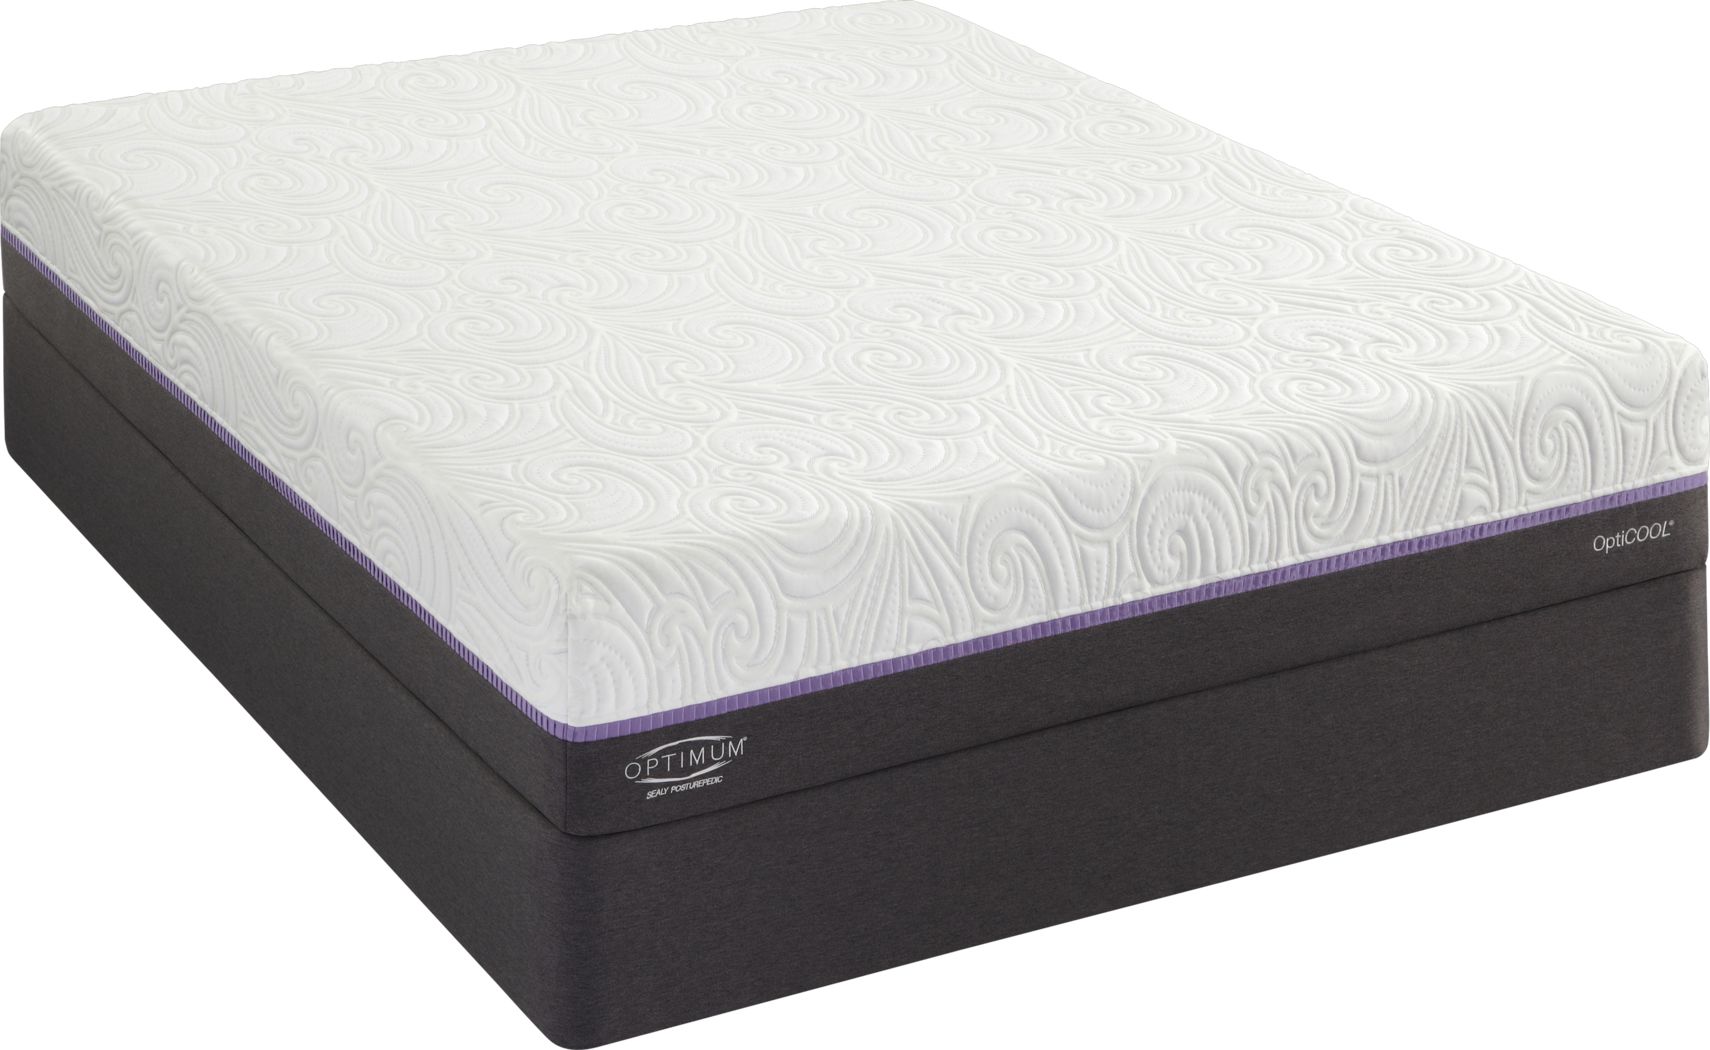 sealy posturepedic cool comfort mattress